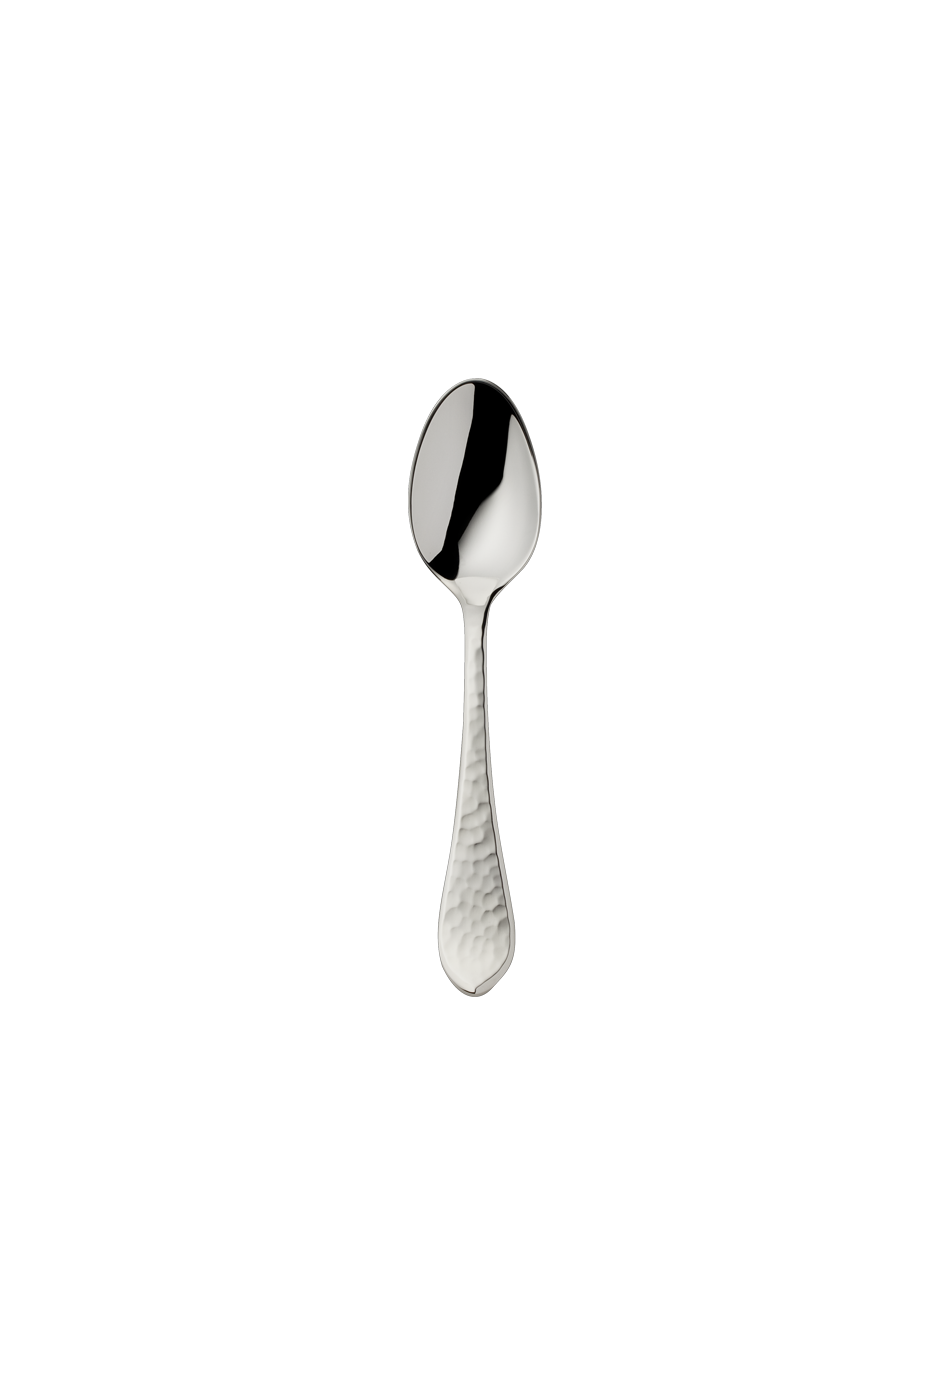 Martelé Coffee Spoon 13,0 Cm (150g massive silverplated)